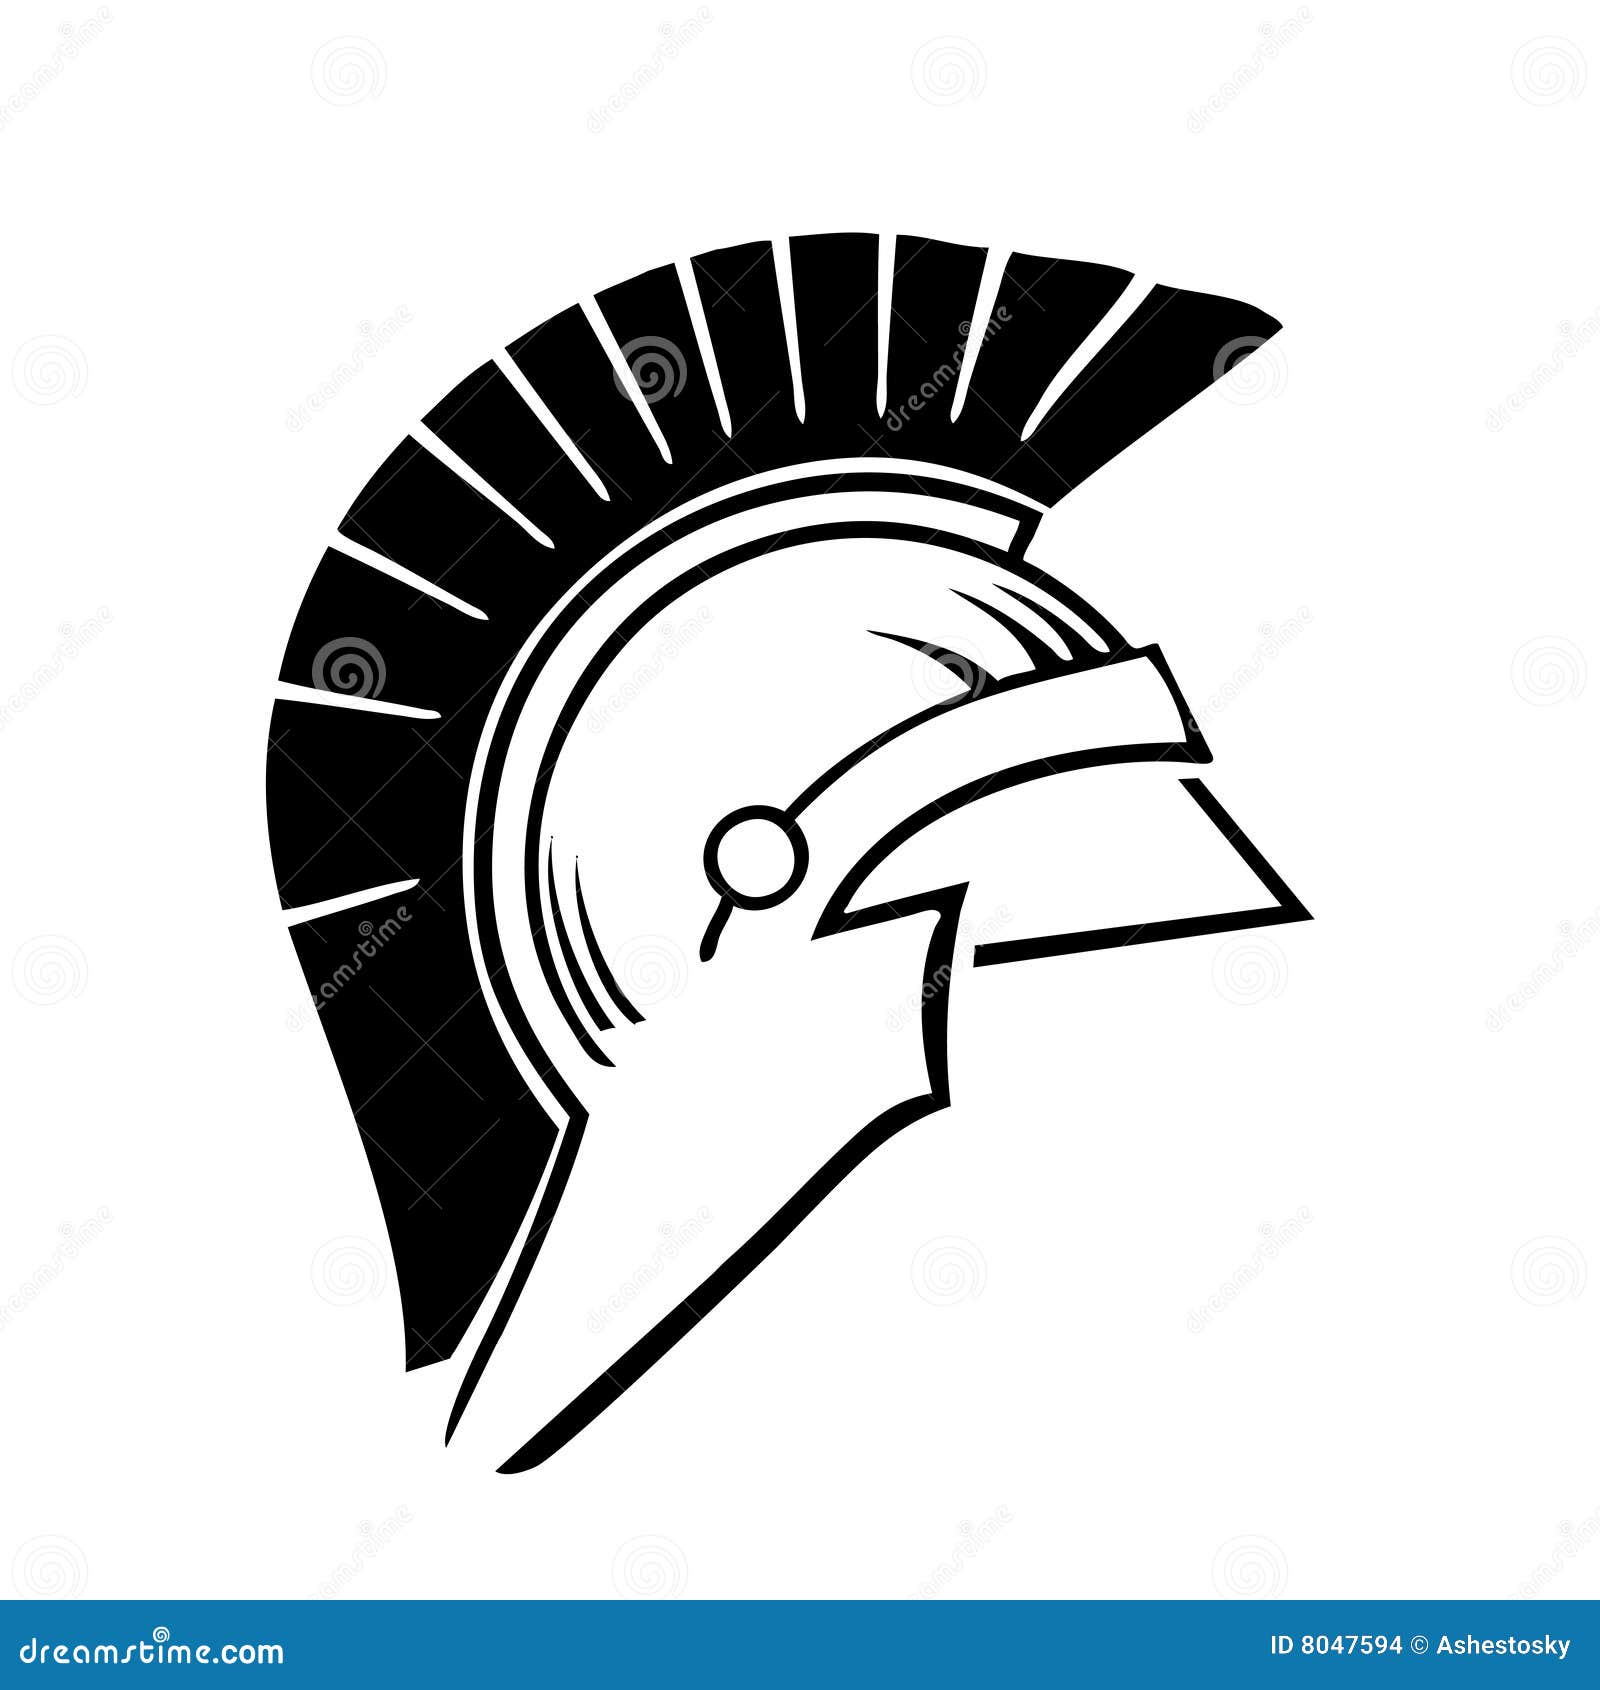 trojan clipart logo - photo #36